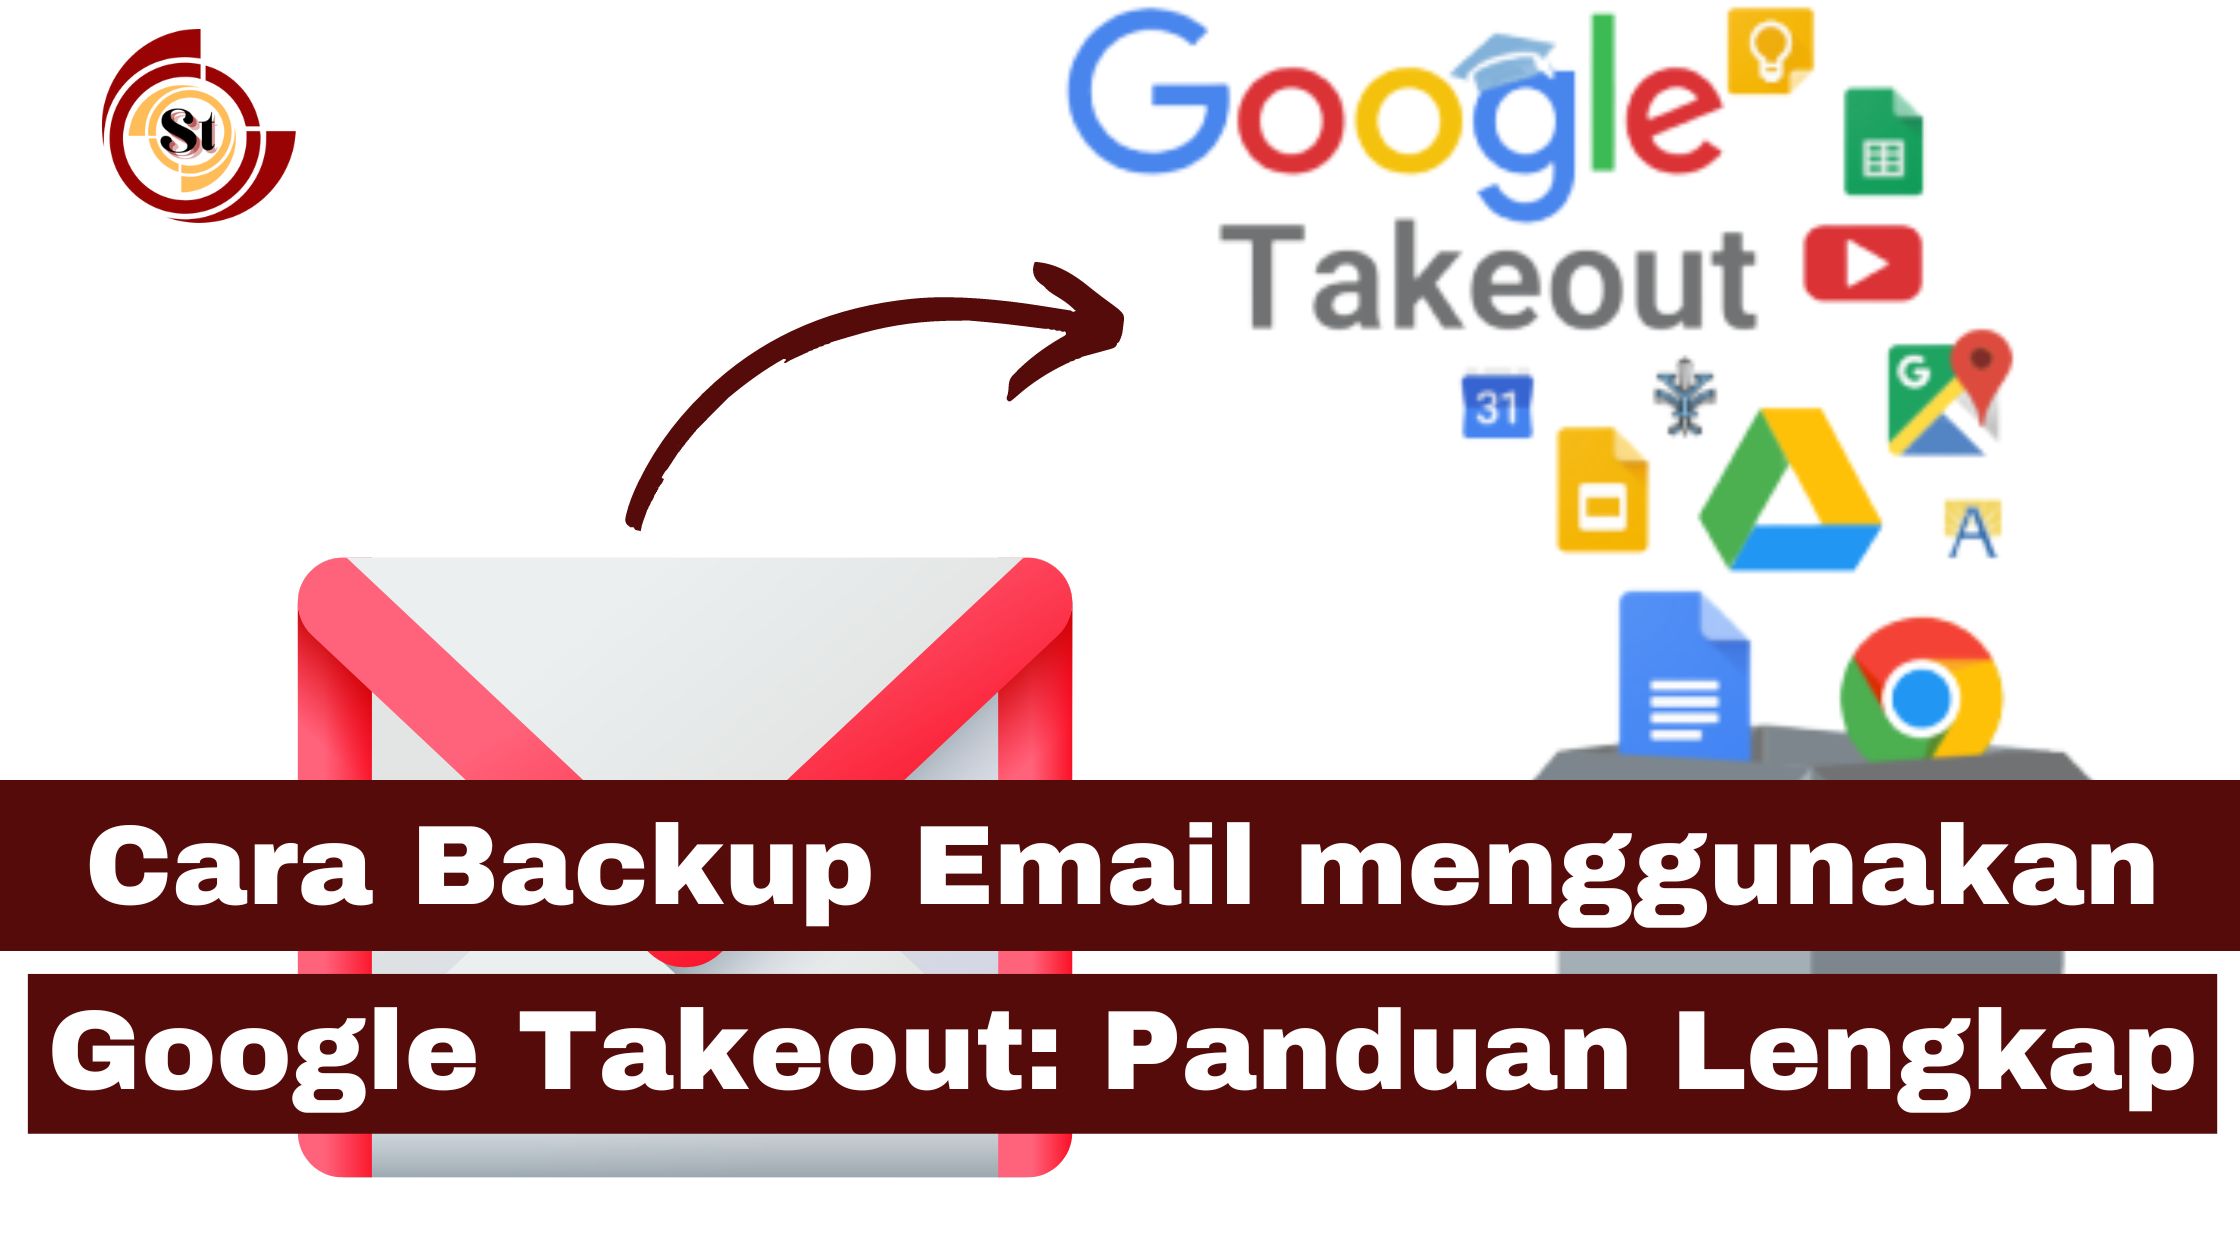 Cara Backup Email menggunakan Google Takeout